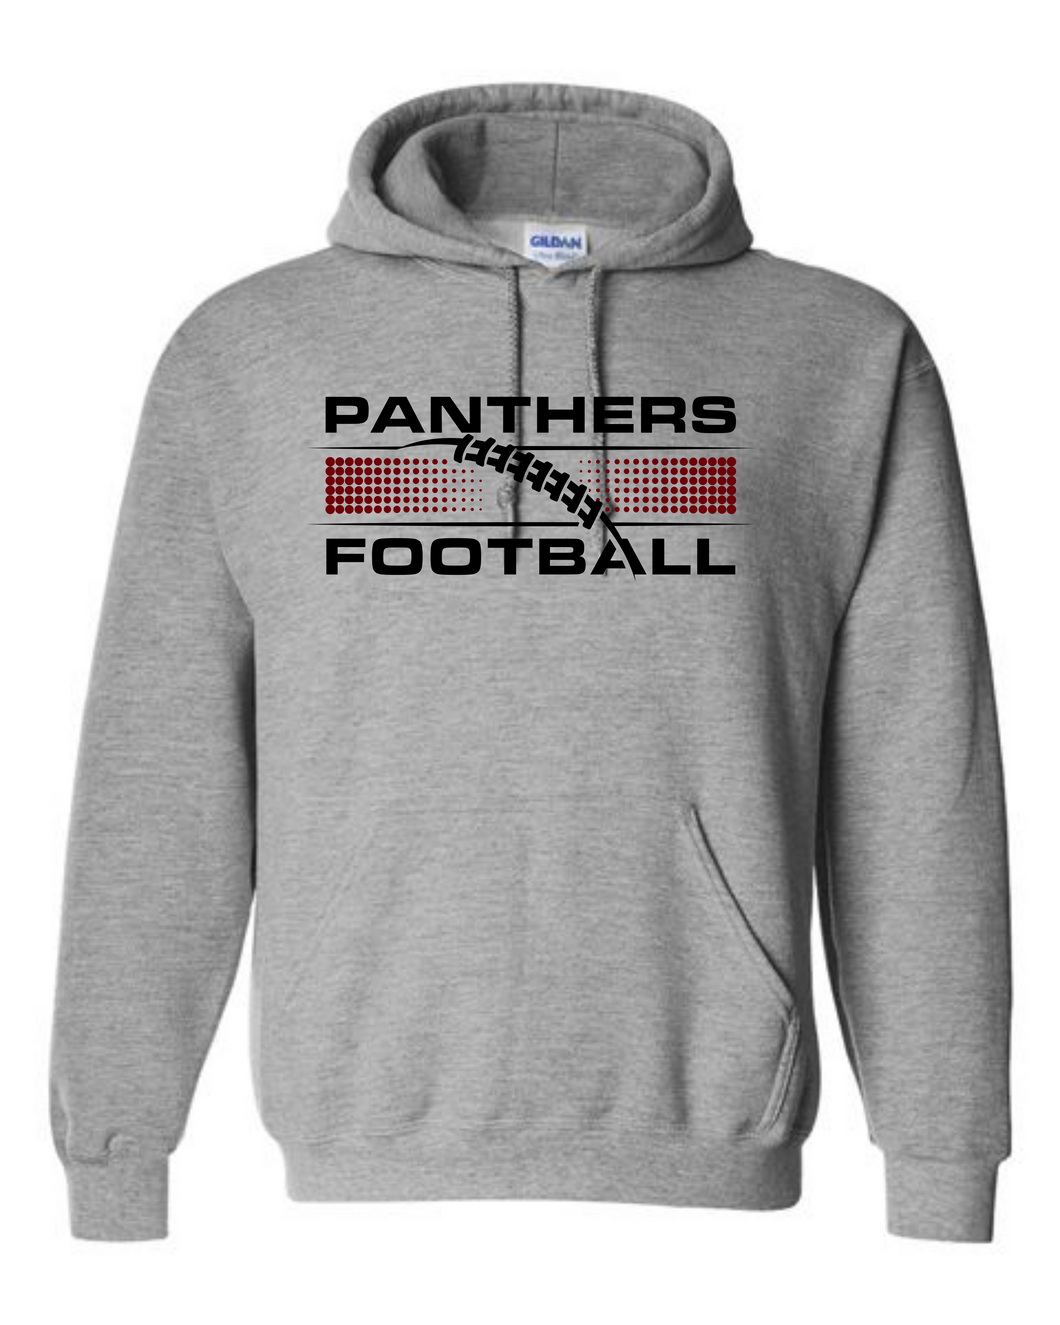 Panthers Football Dot Design Hoodie